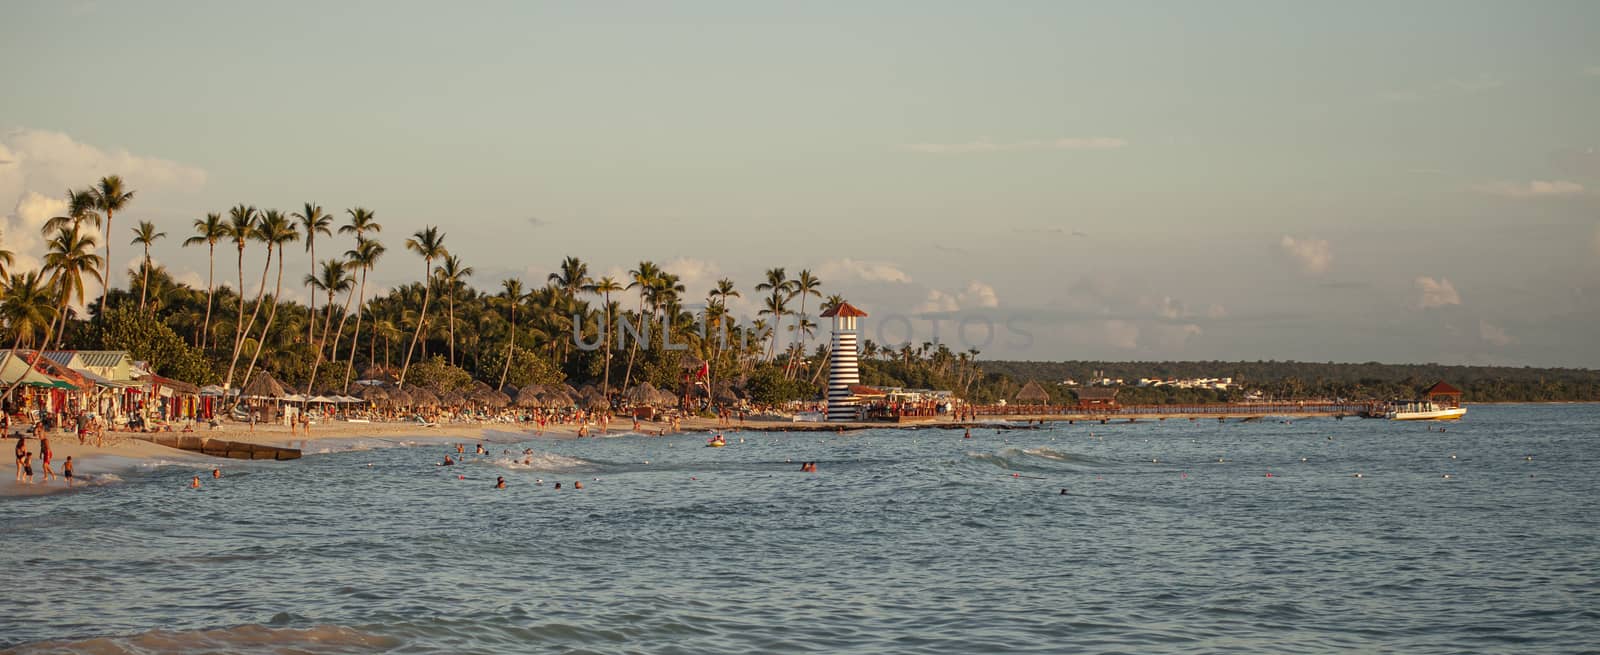 Sunset sea bayahibe, Dominican Republic